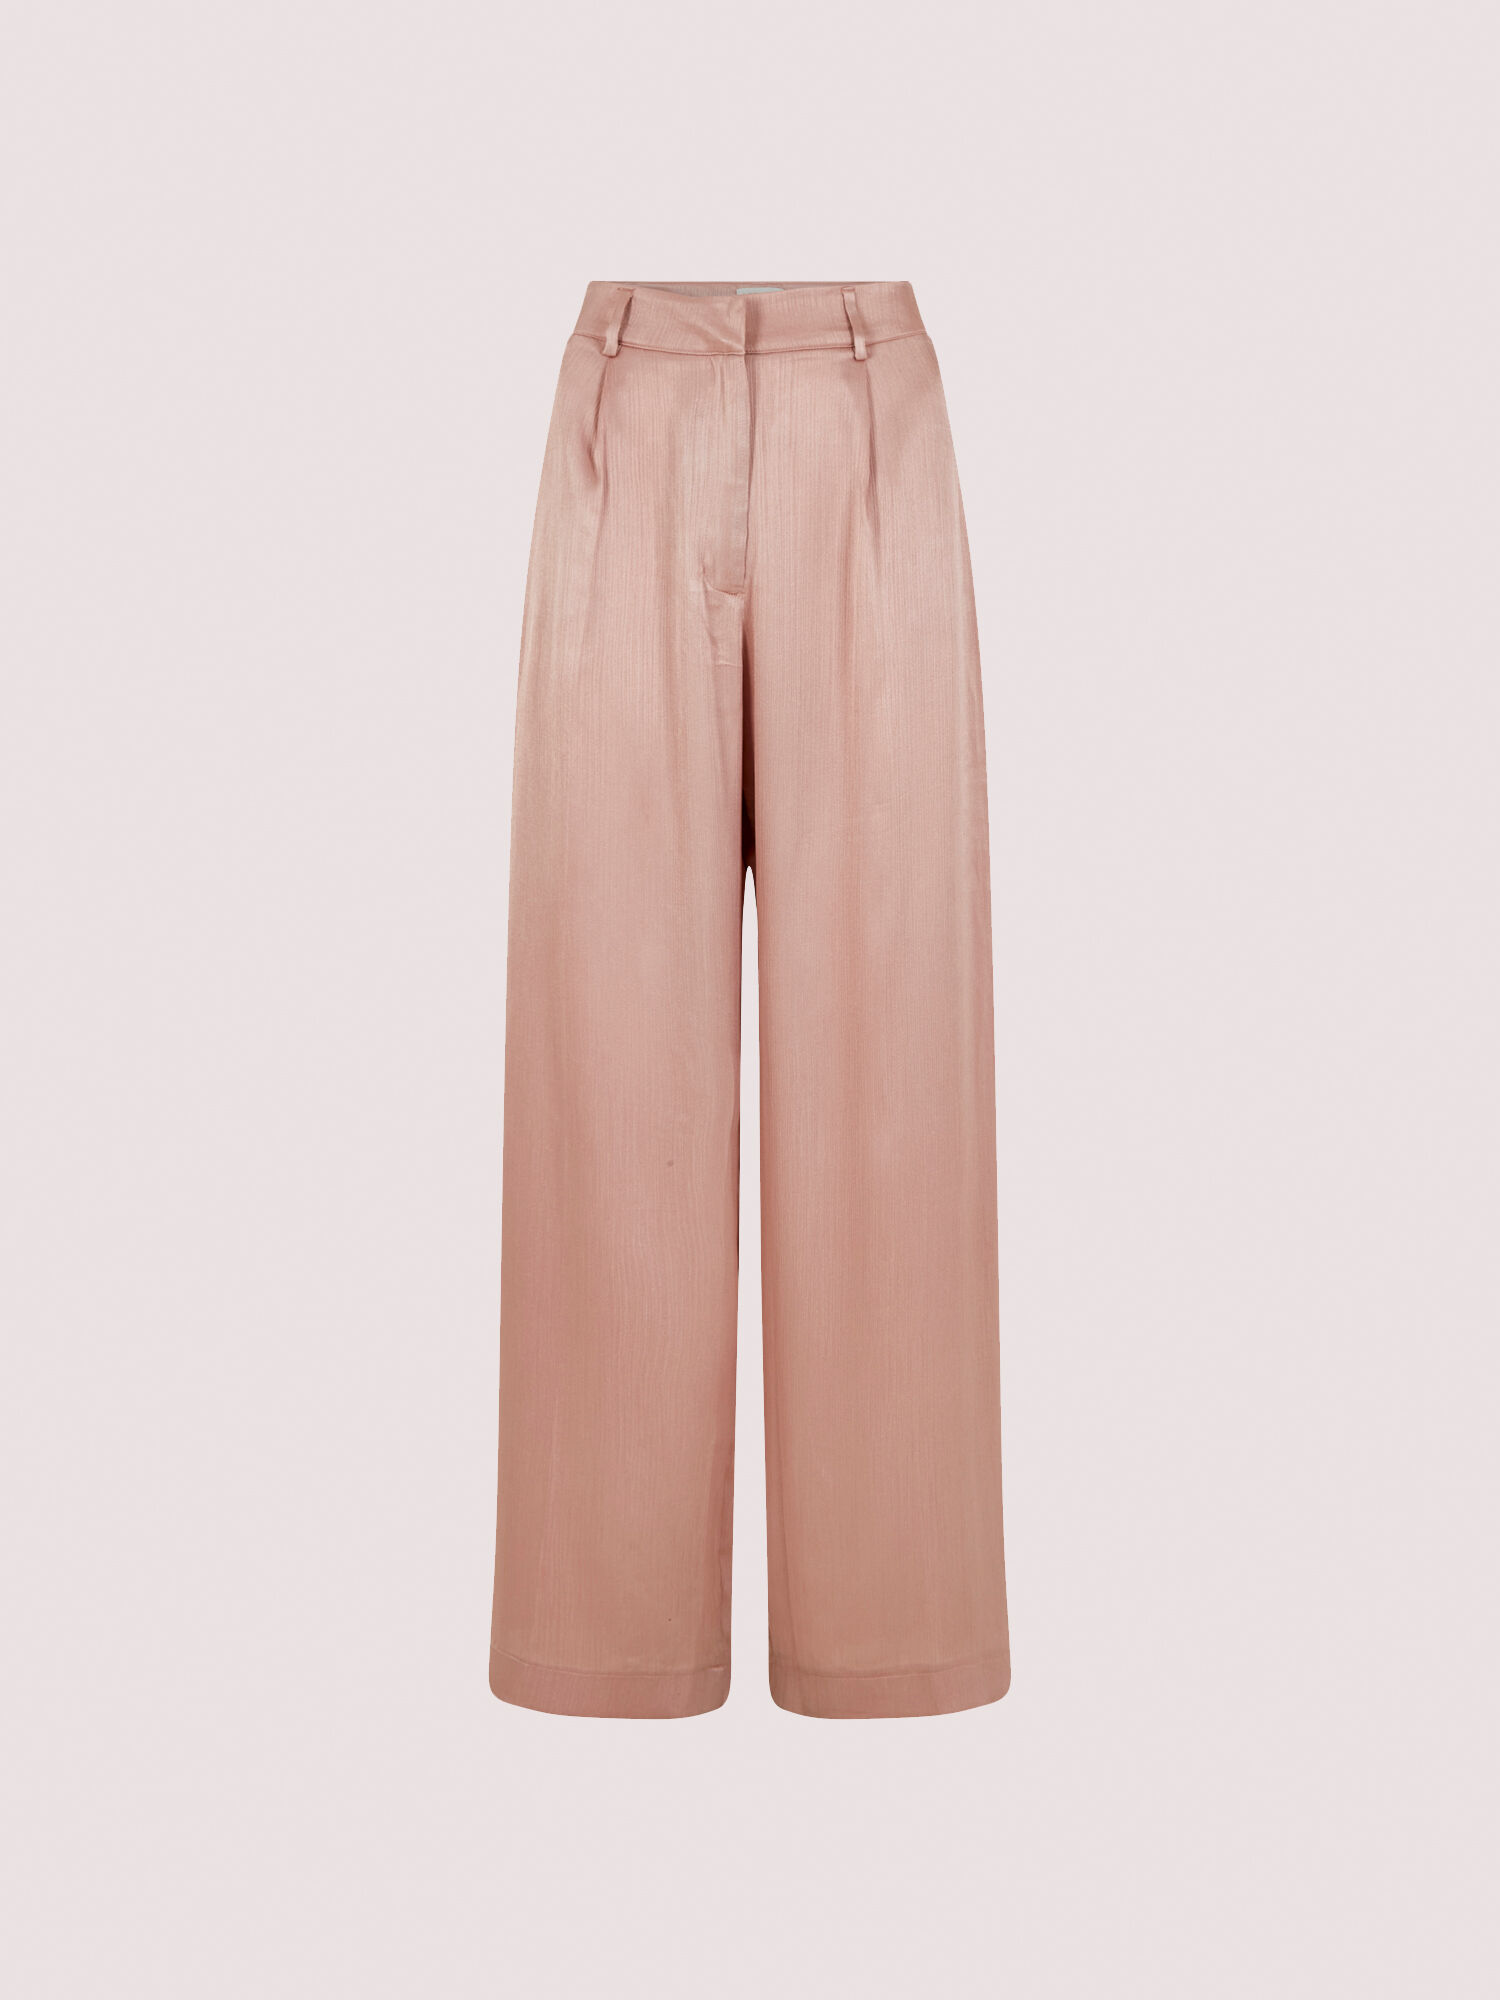 Adidas Disney Bambi Graphic Pants Track magenta pink trousers womens UK 10  S 36 | eBay